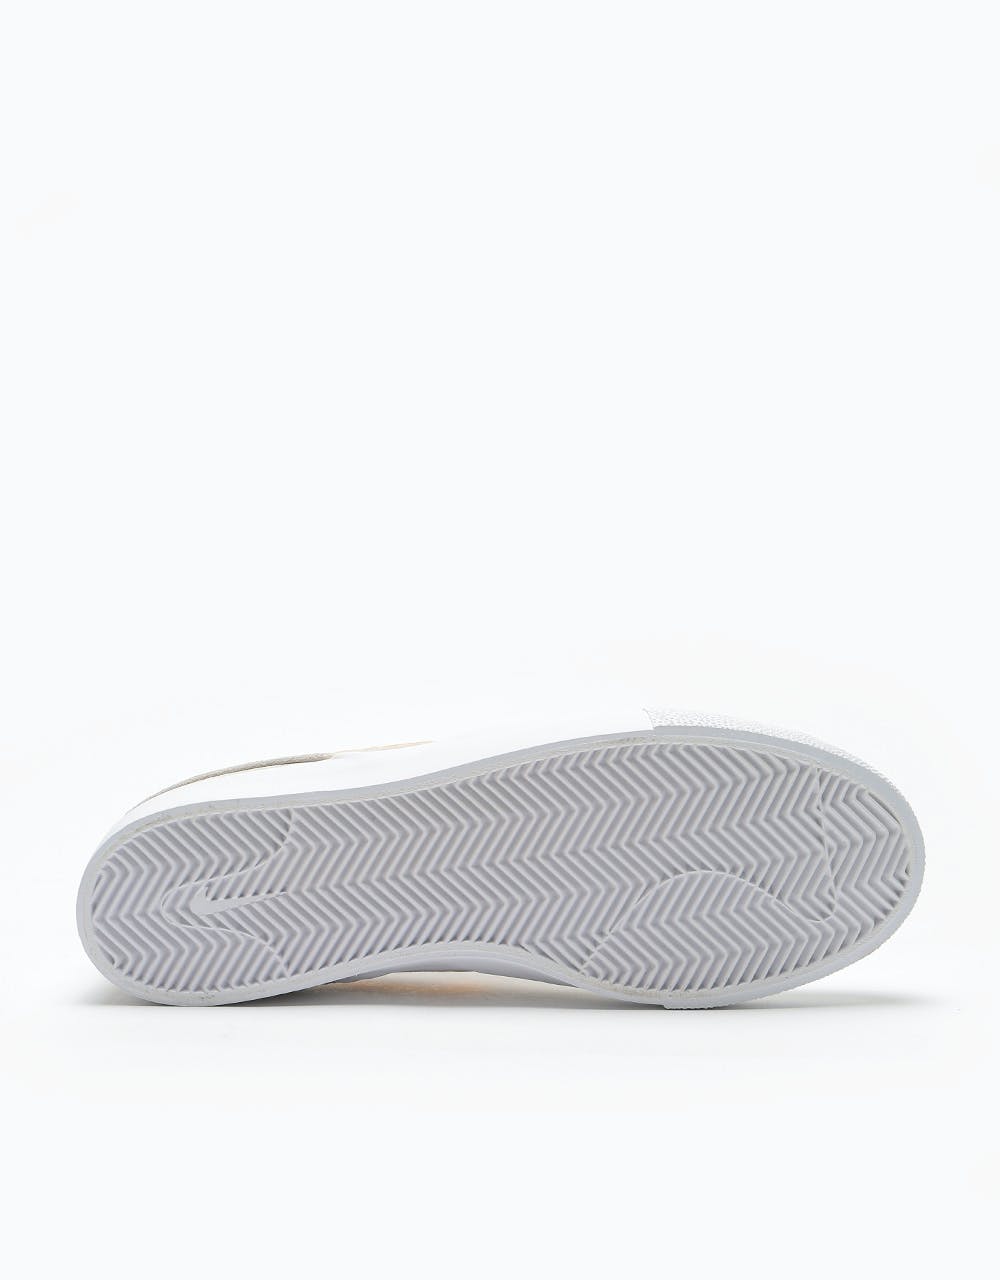 Nike SB Zoom Stefan Janoski Slip RM Skate Shoes - Summit White/Univers